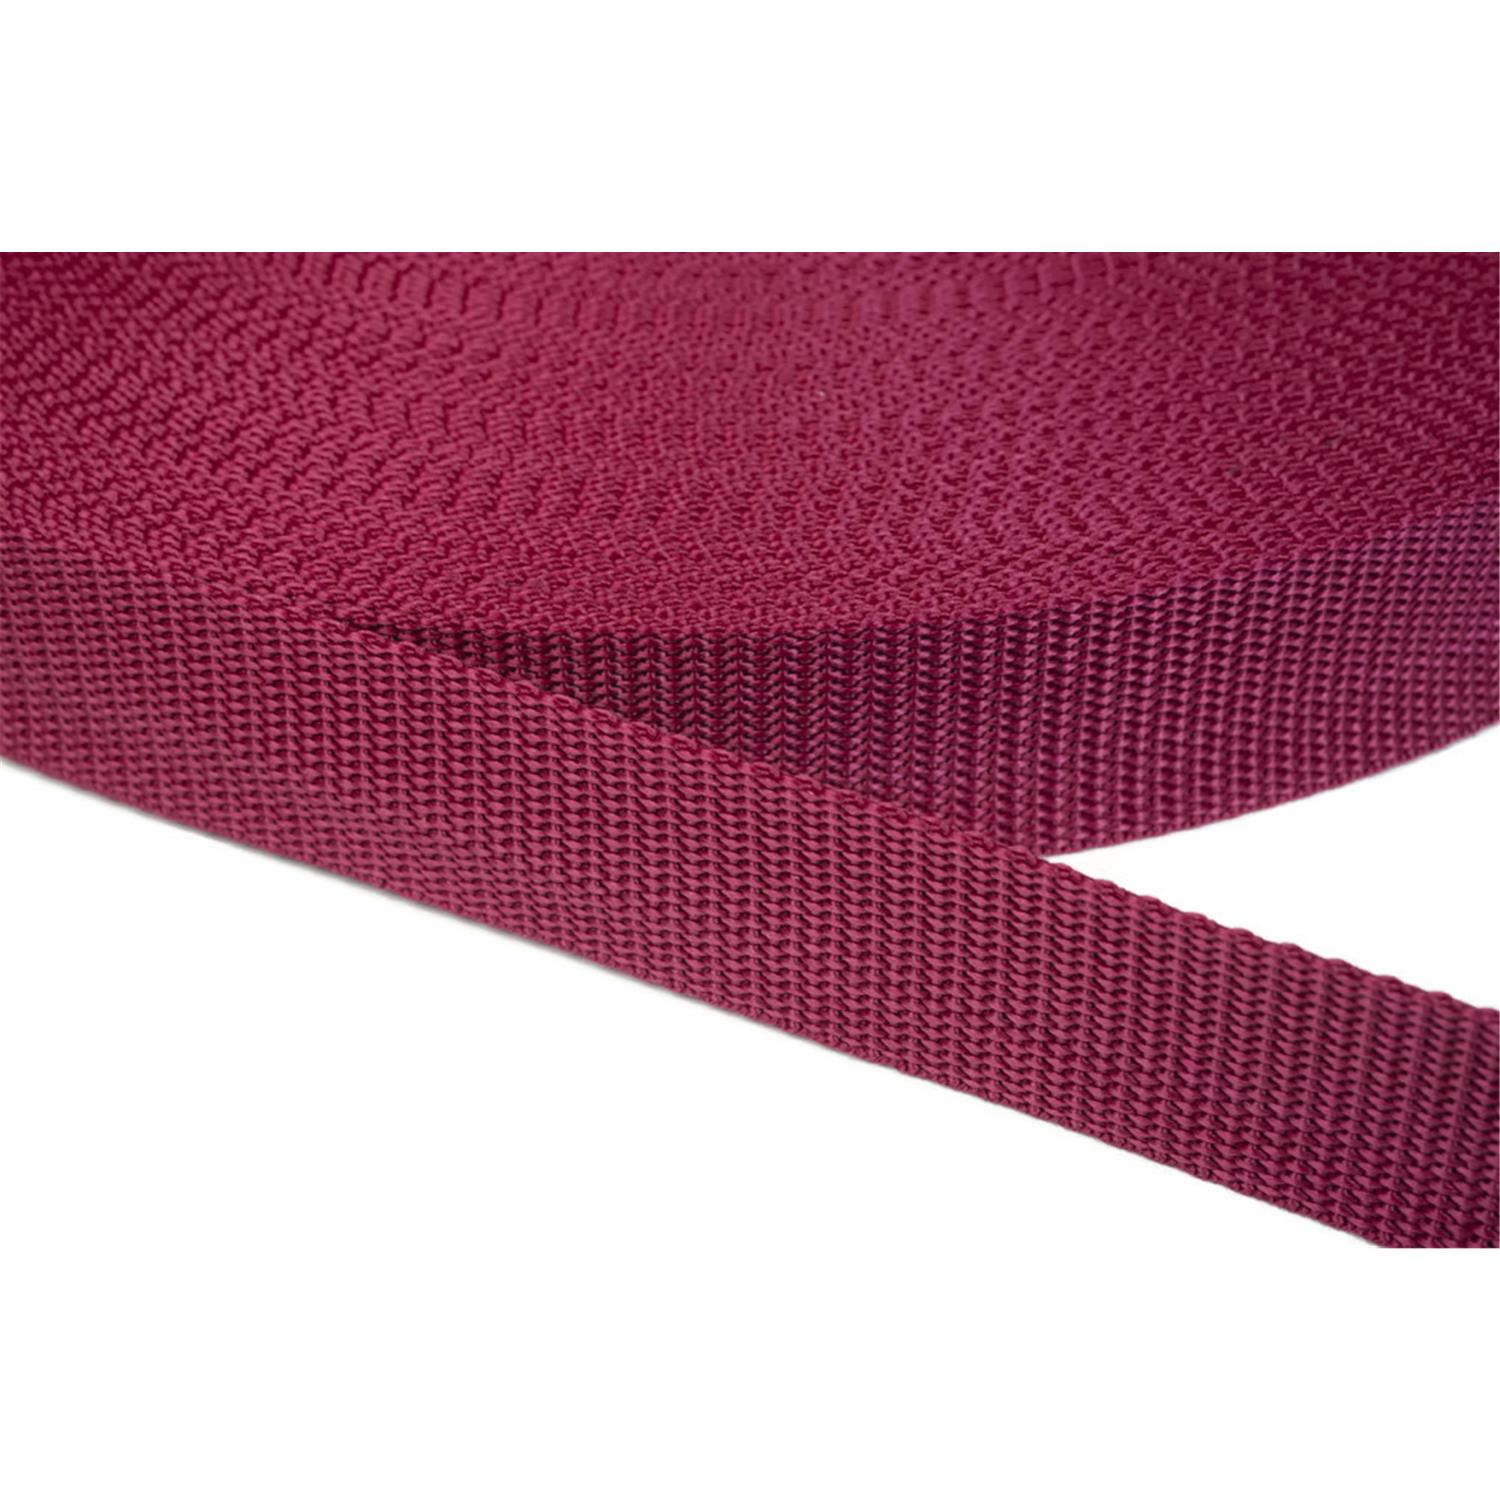 Gurtband 25mm breit aus Polypropylen in 41 Farben 21 - dunkelrot 50 Meter